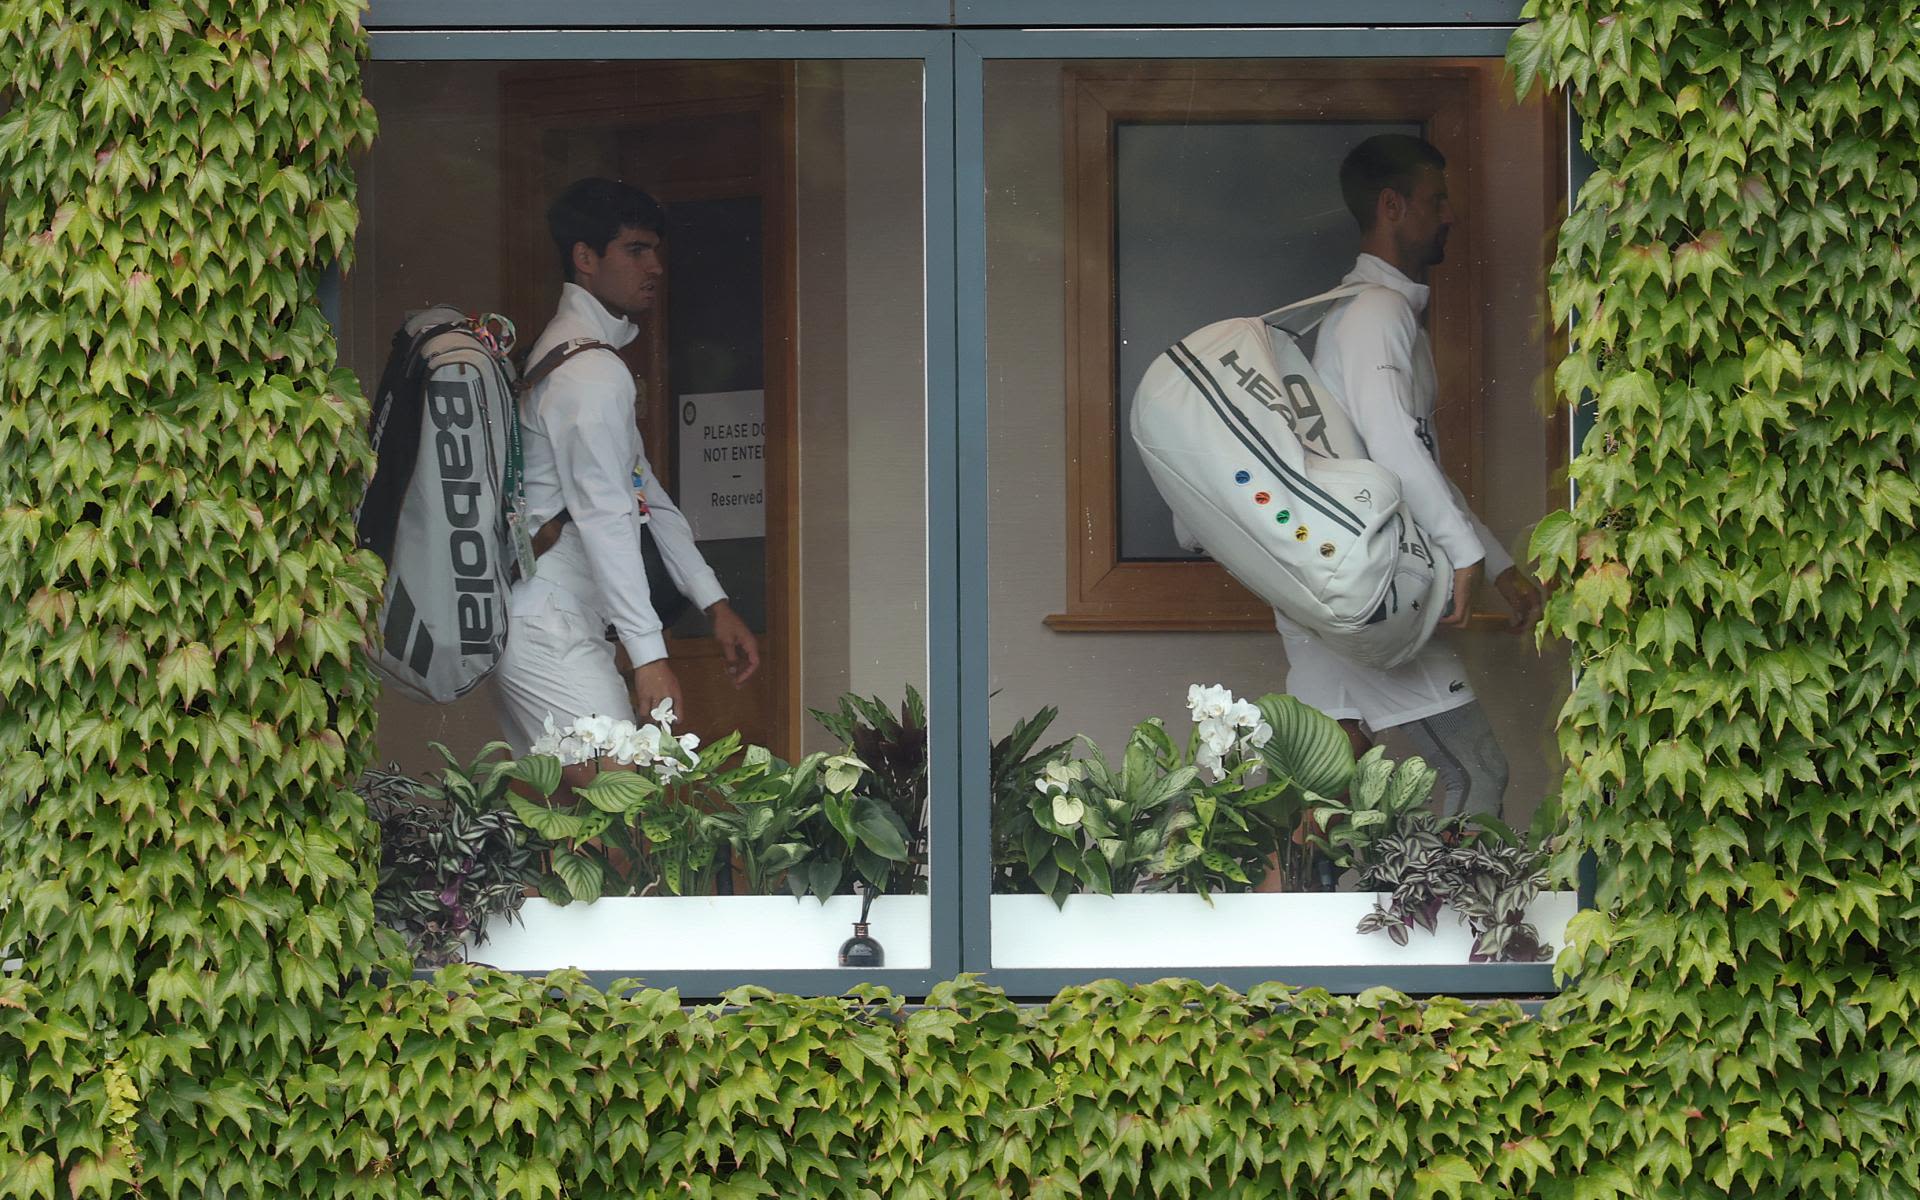 Carlos Alcaraz, Novak Djokovic, Jannik Sinner - Who holds ATP throne after Wimbledon?